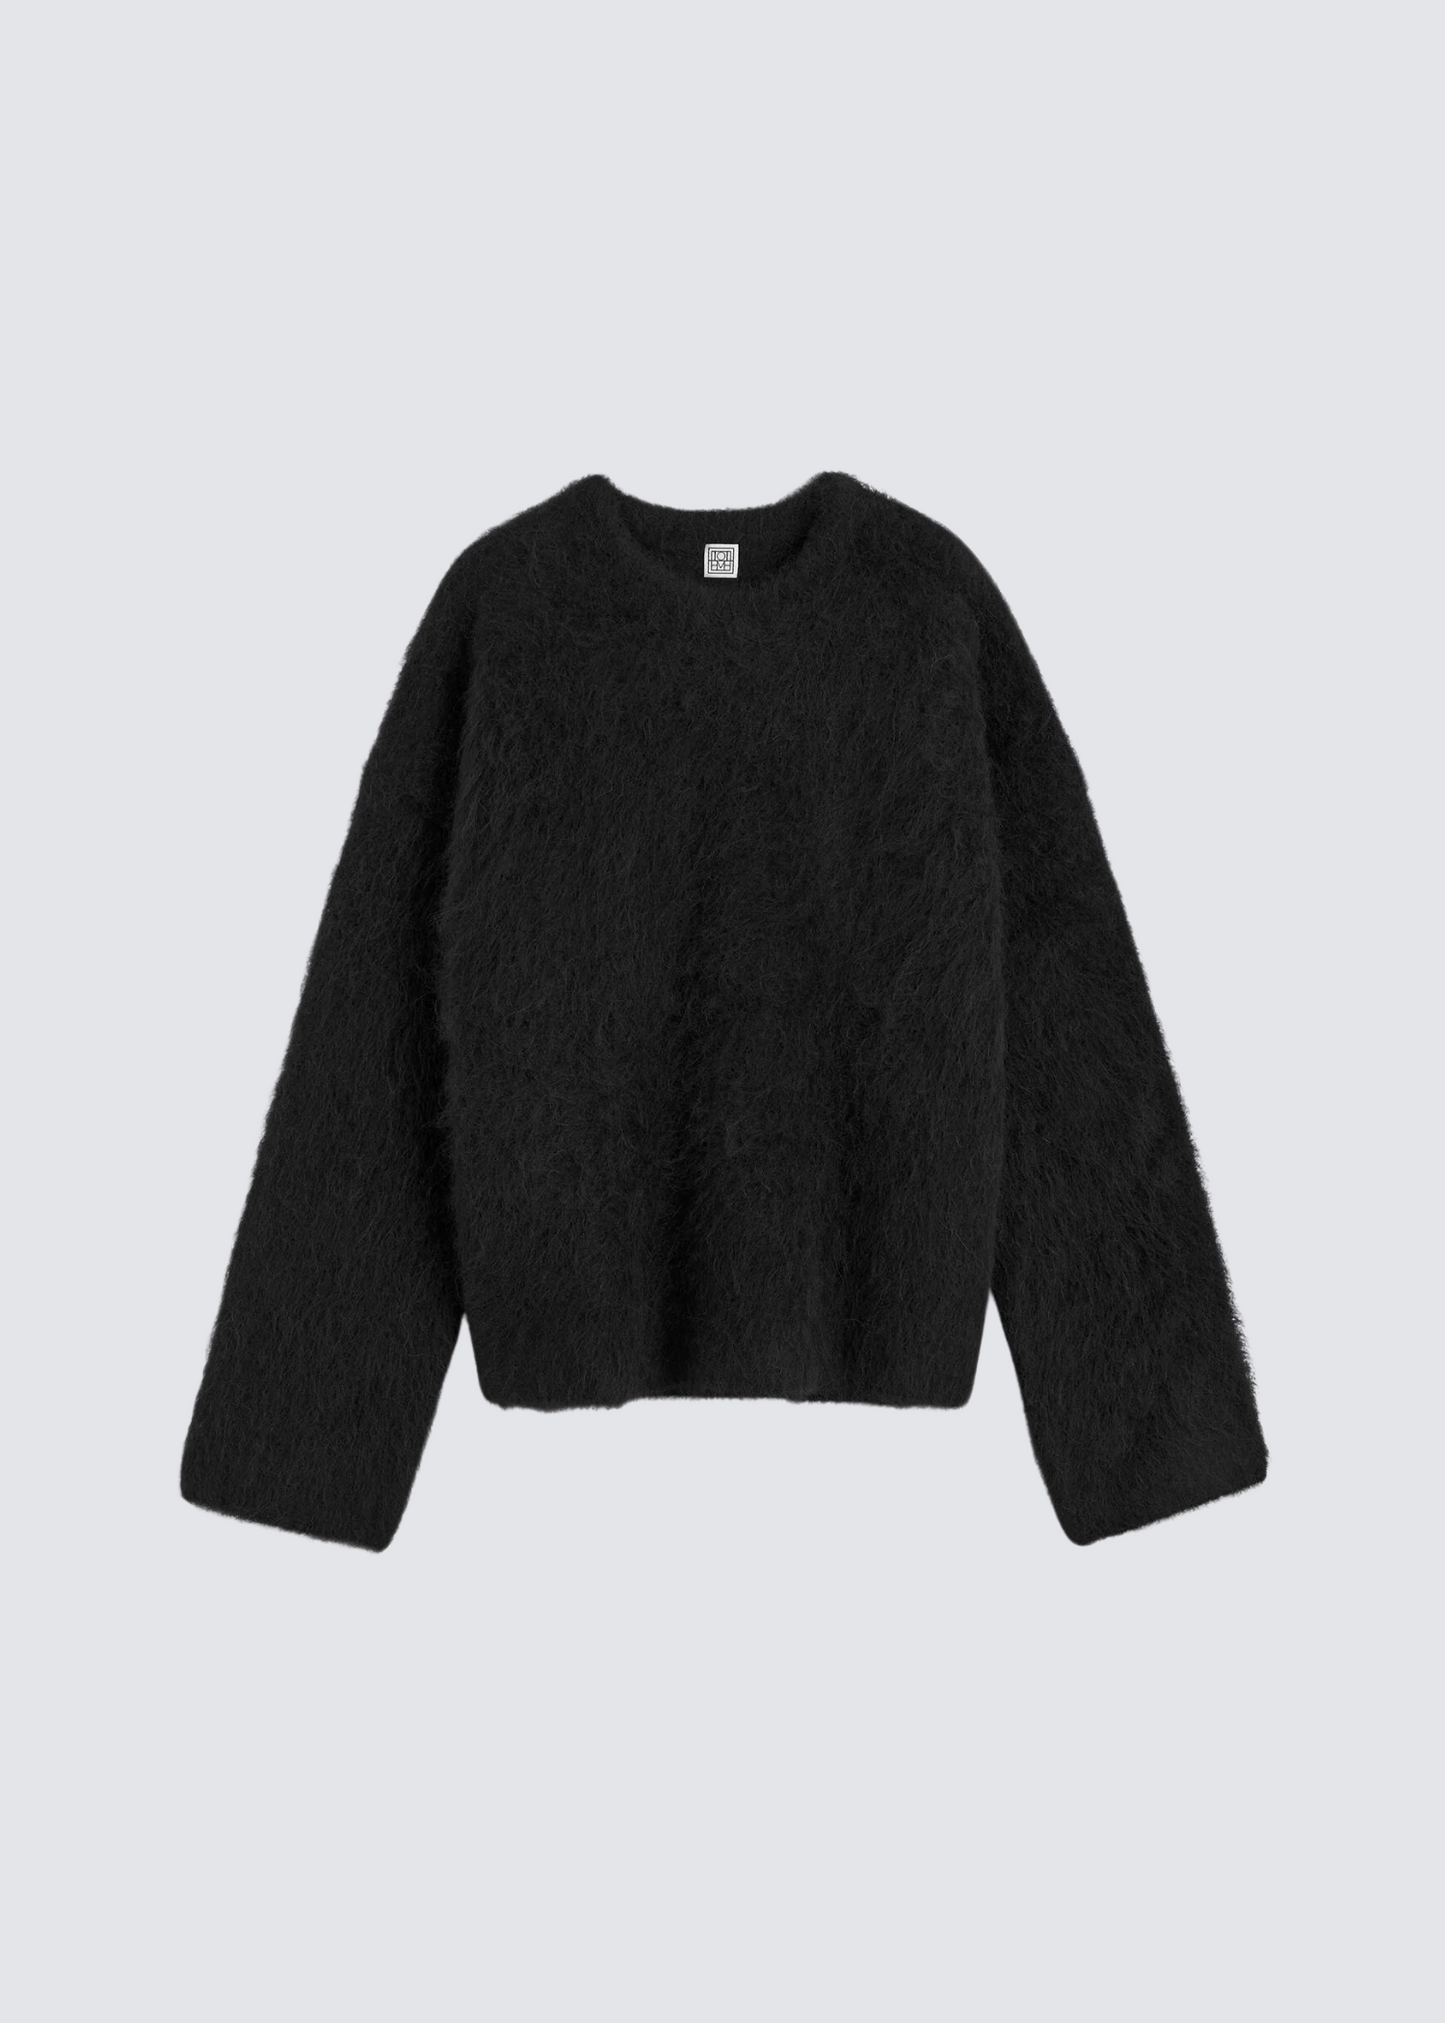 Boxy Alpaka Knit, Black, Pullover